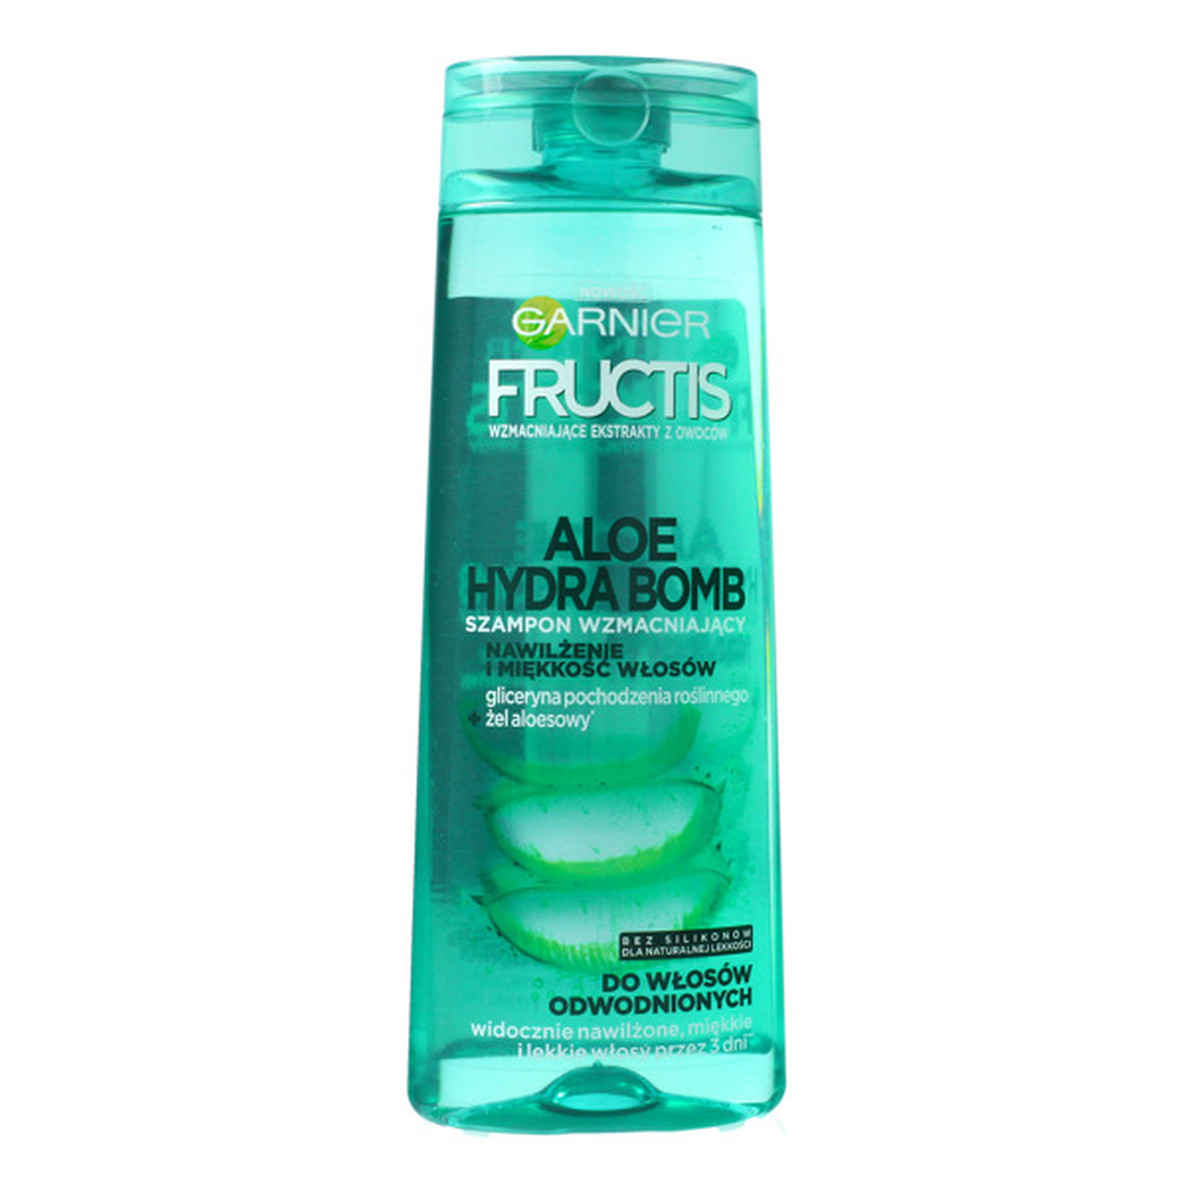 garnier fructis aloe hydra bomb szampon skład